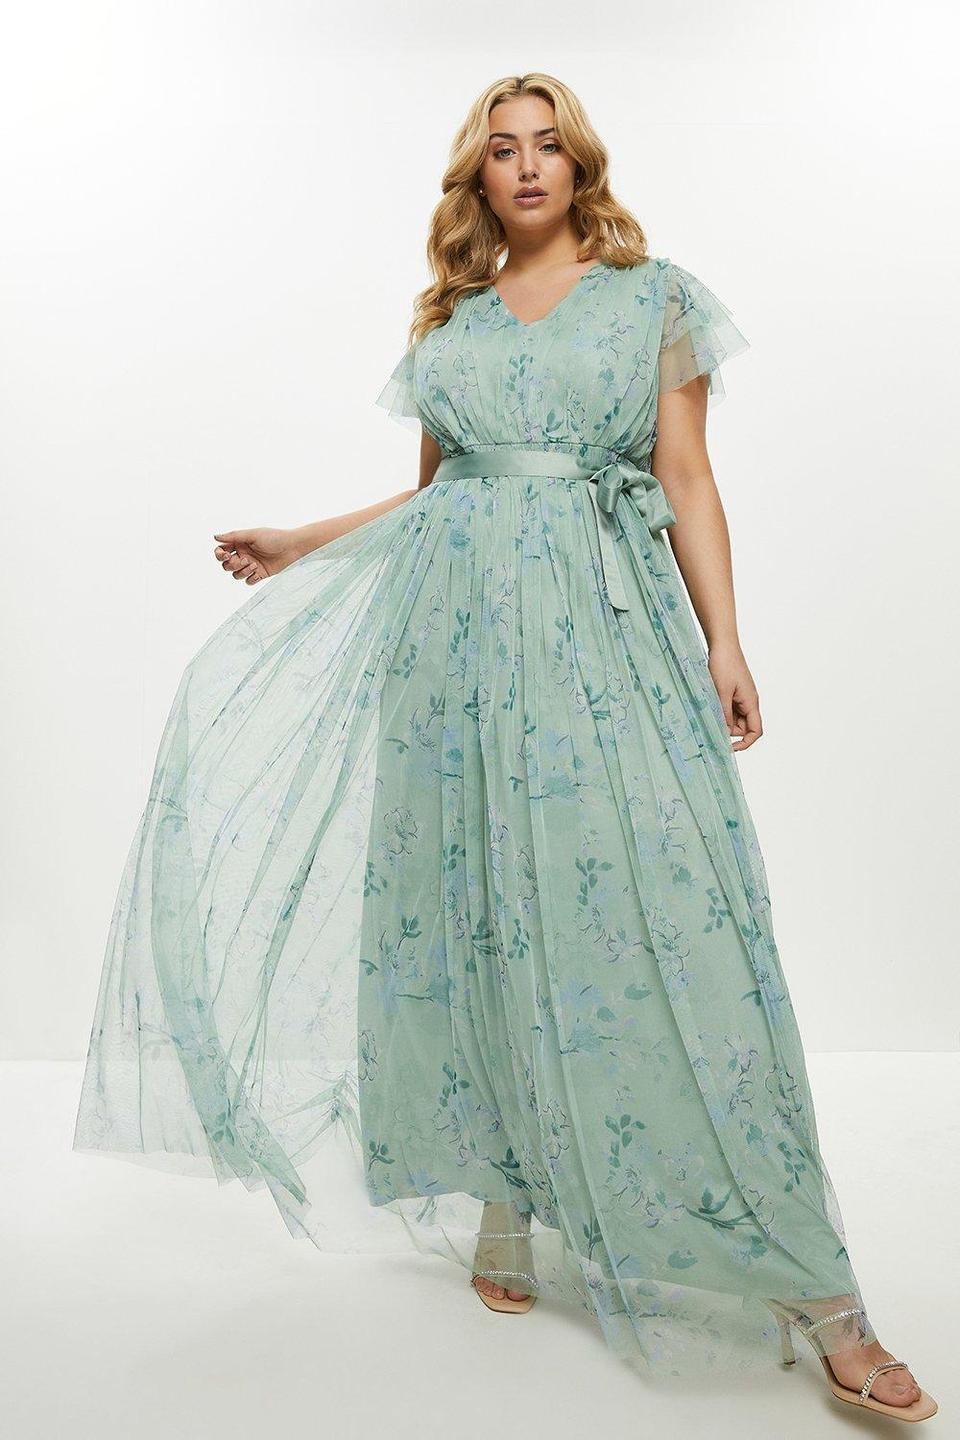 The Best Plus Size Bridesmaid Dresses: 34 Gorgeous Gowns for Curves ...